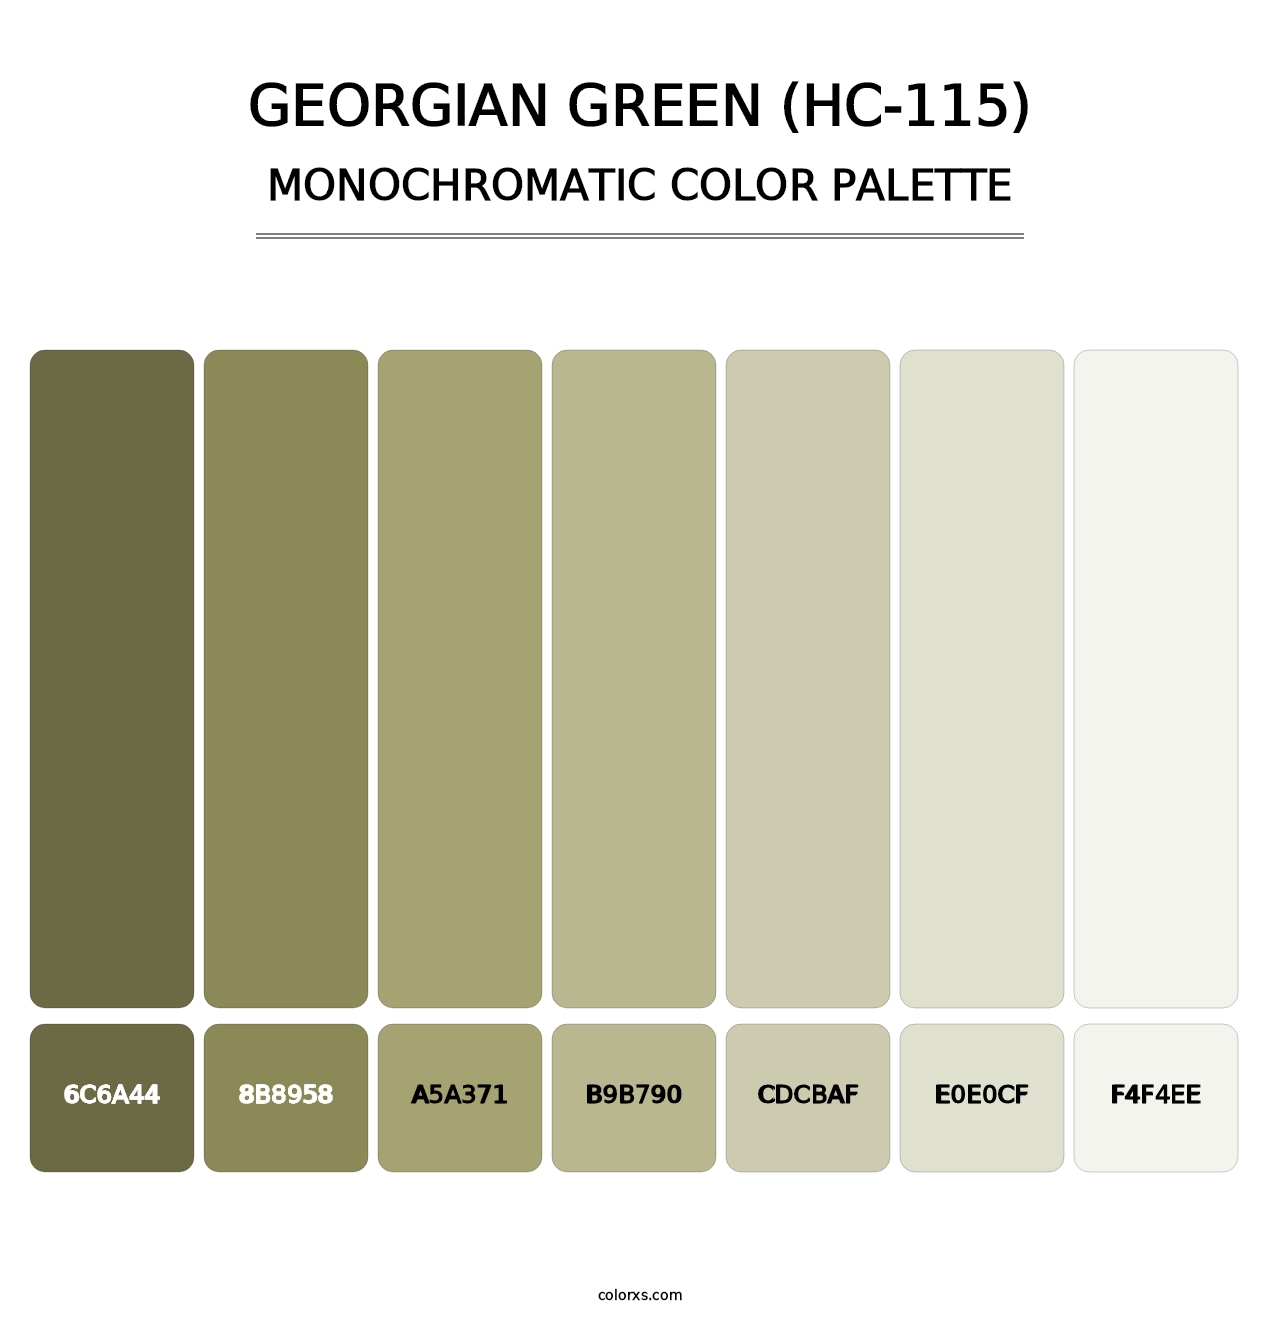 Georgian Green (HC-115) - Monochromatic Color Palette